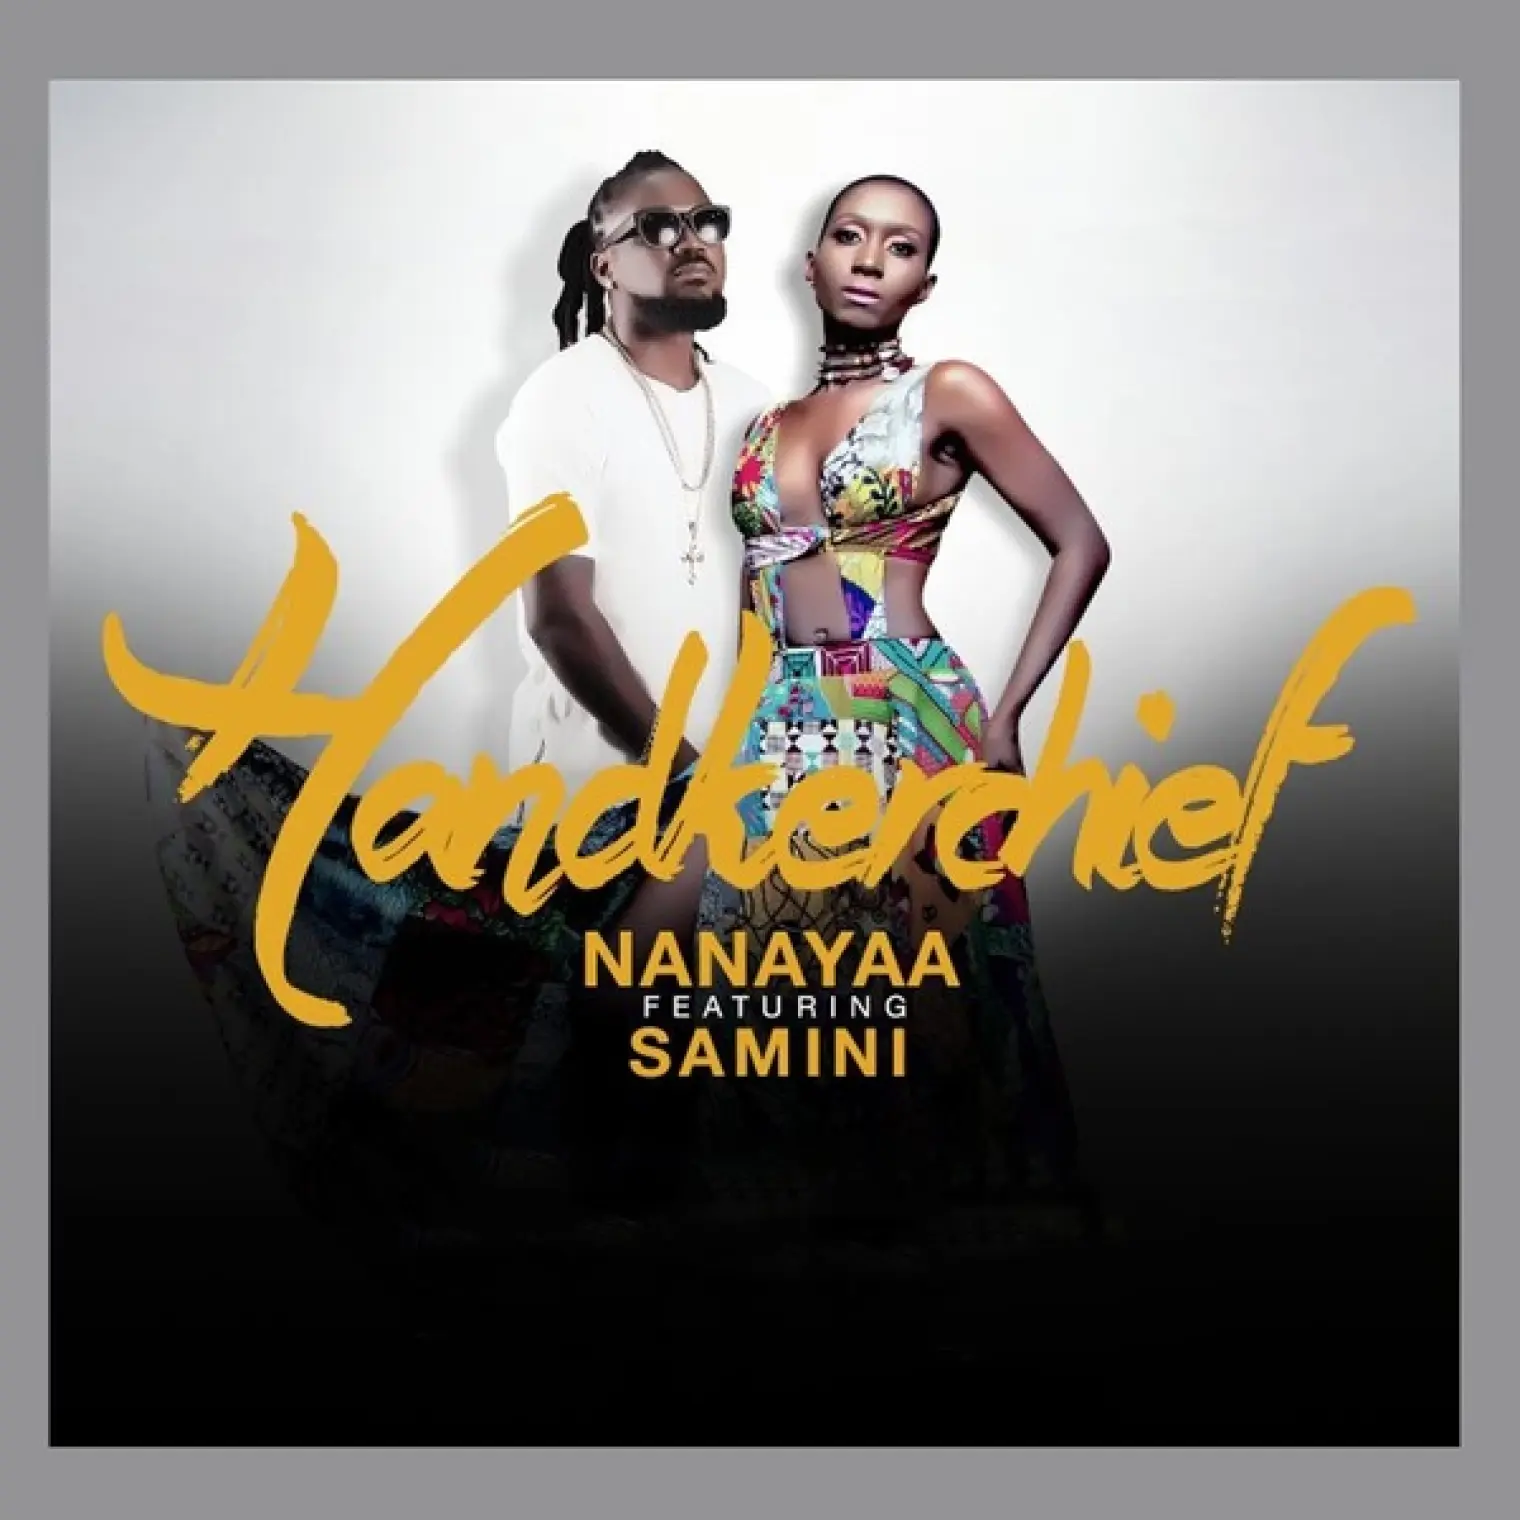 Handkerchief (feat. Samini) -  Nanayaa 